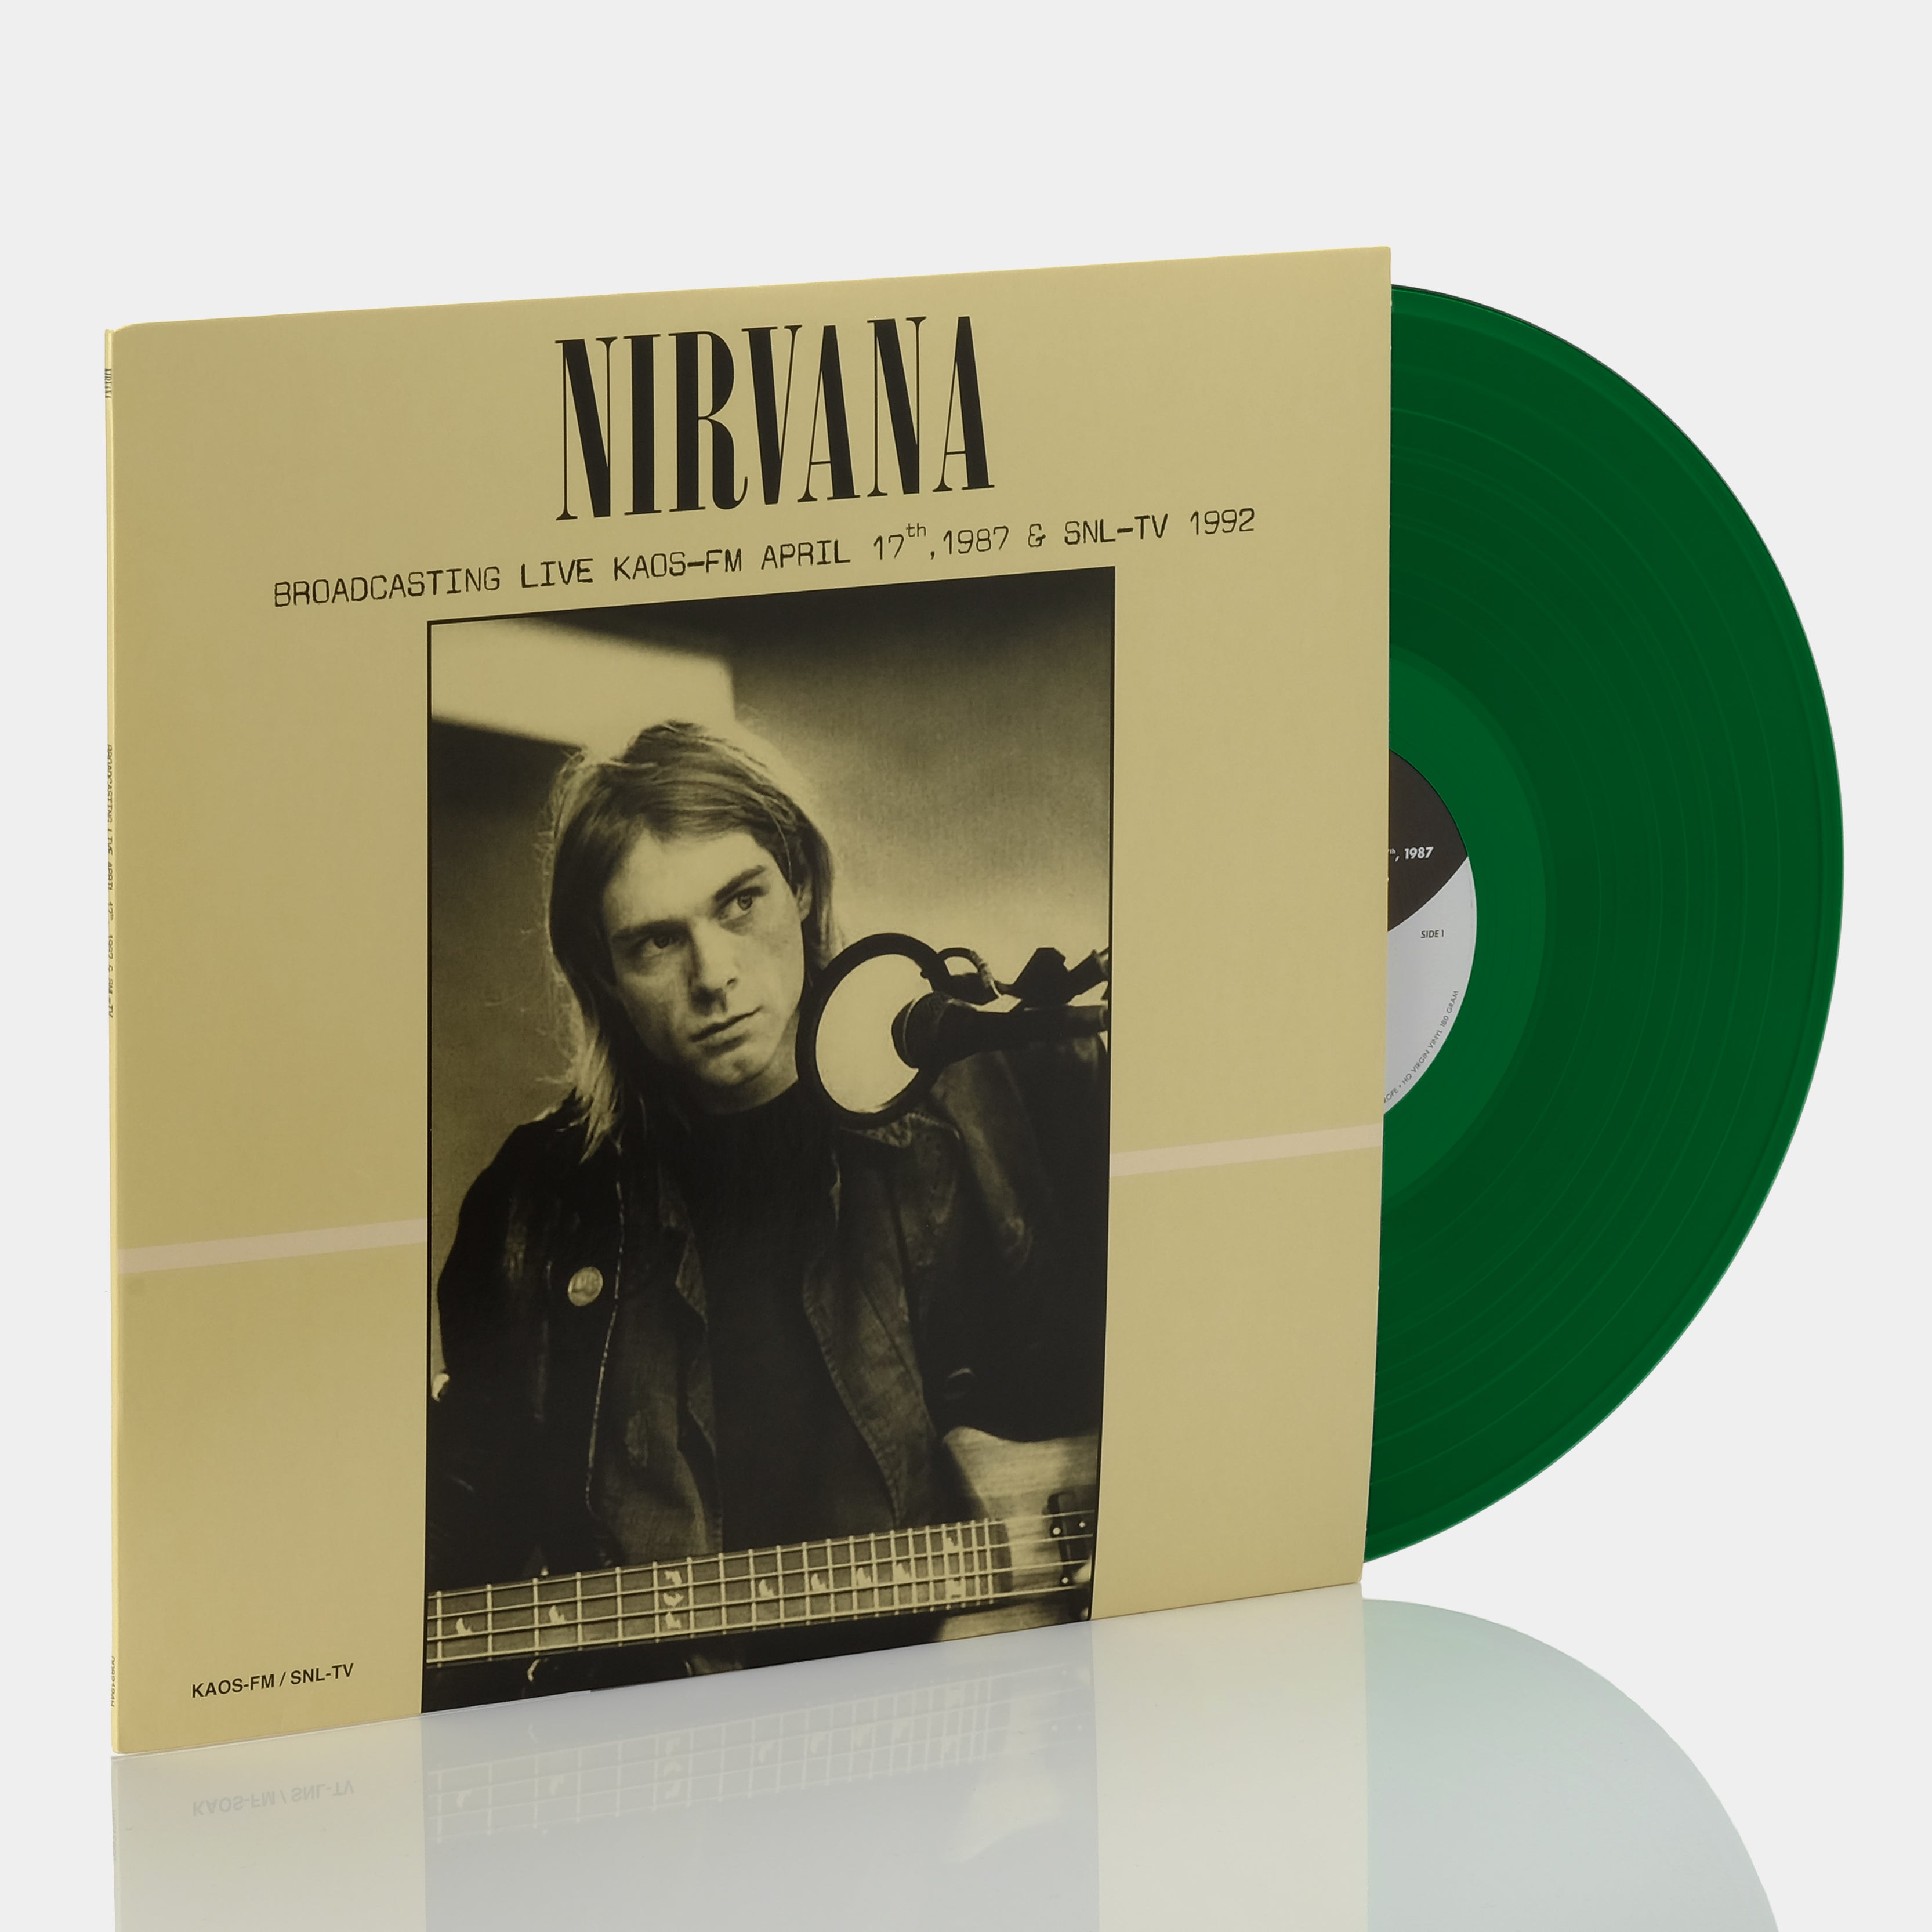 Nirvana - Broadcasting Live KAOS-FM April 17, 1987 & SNL-TV 1992 LP Green Vinyl Record